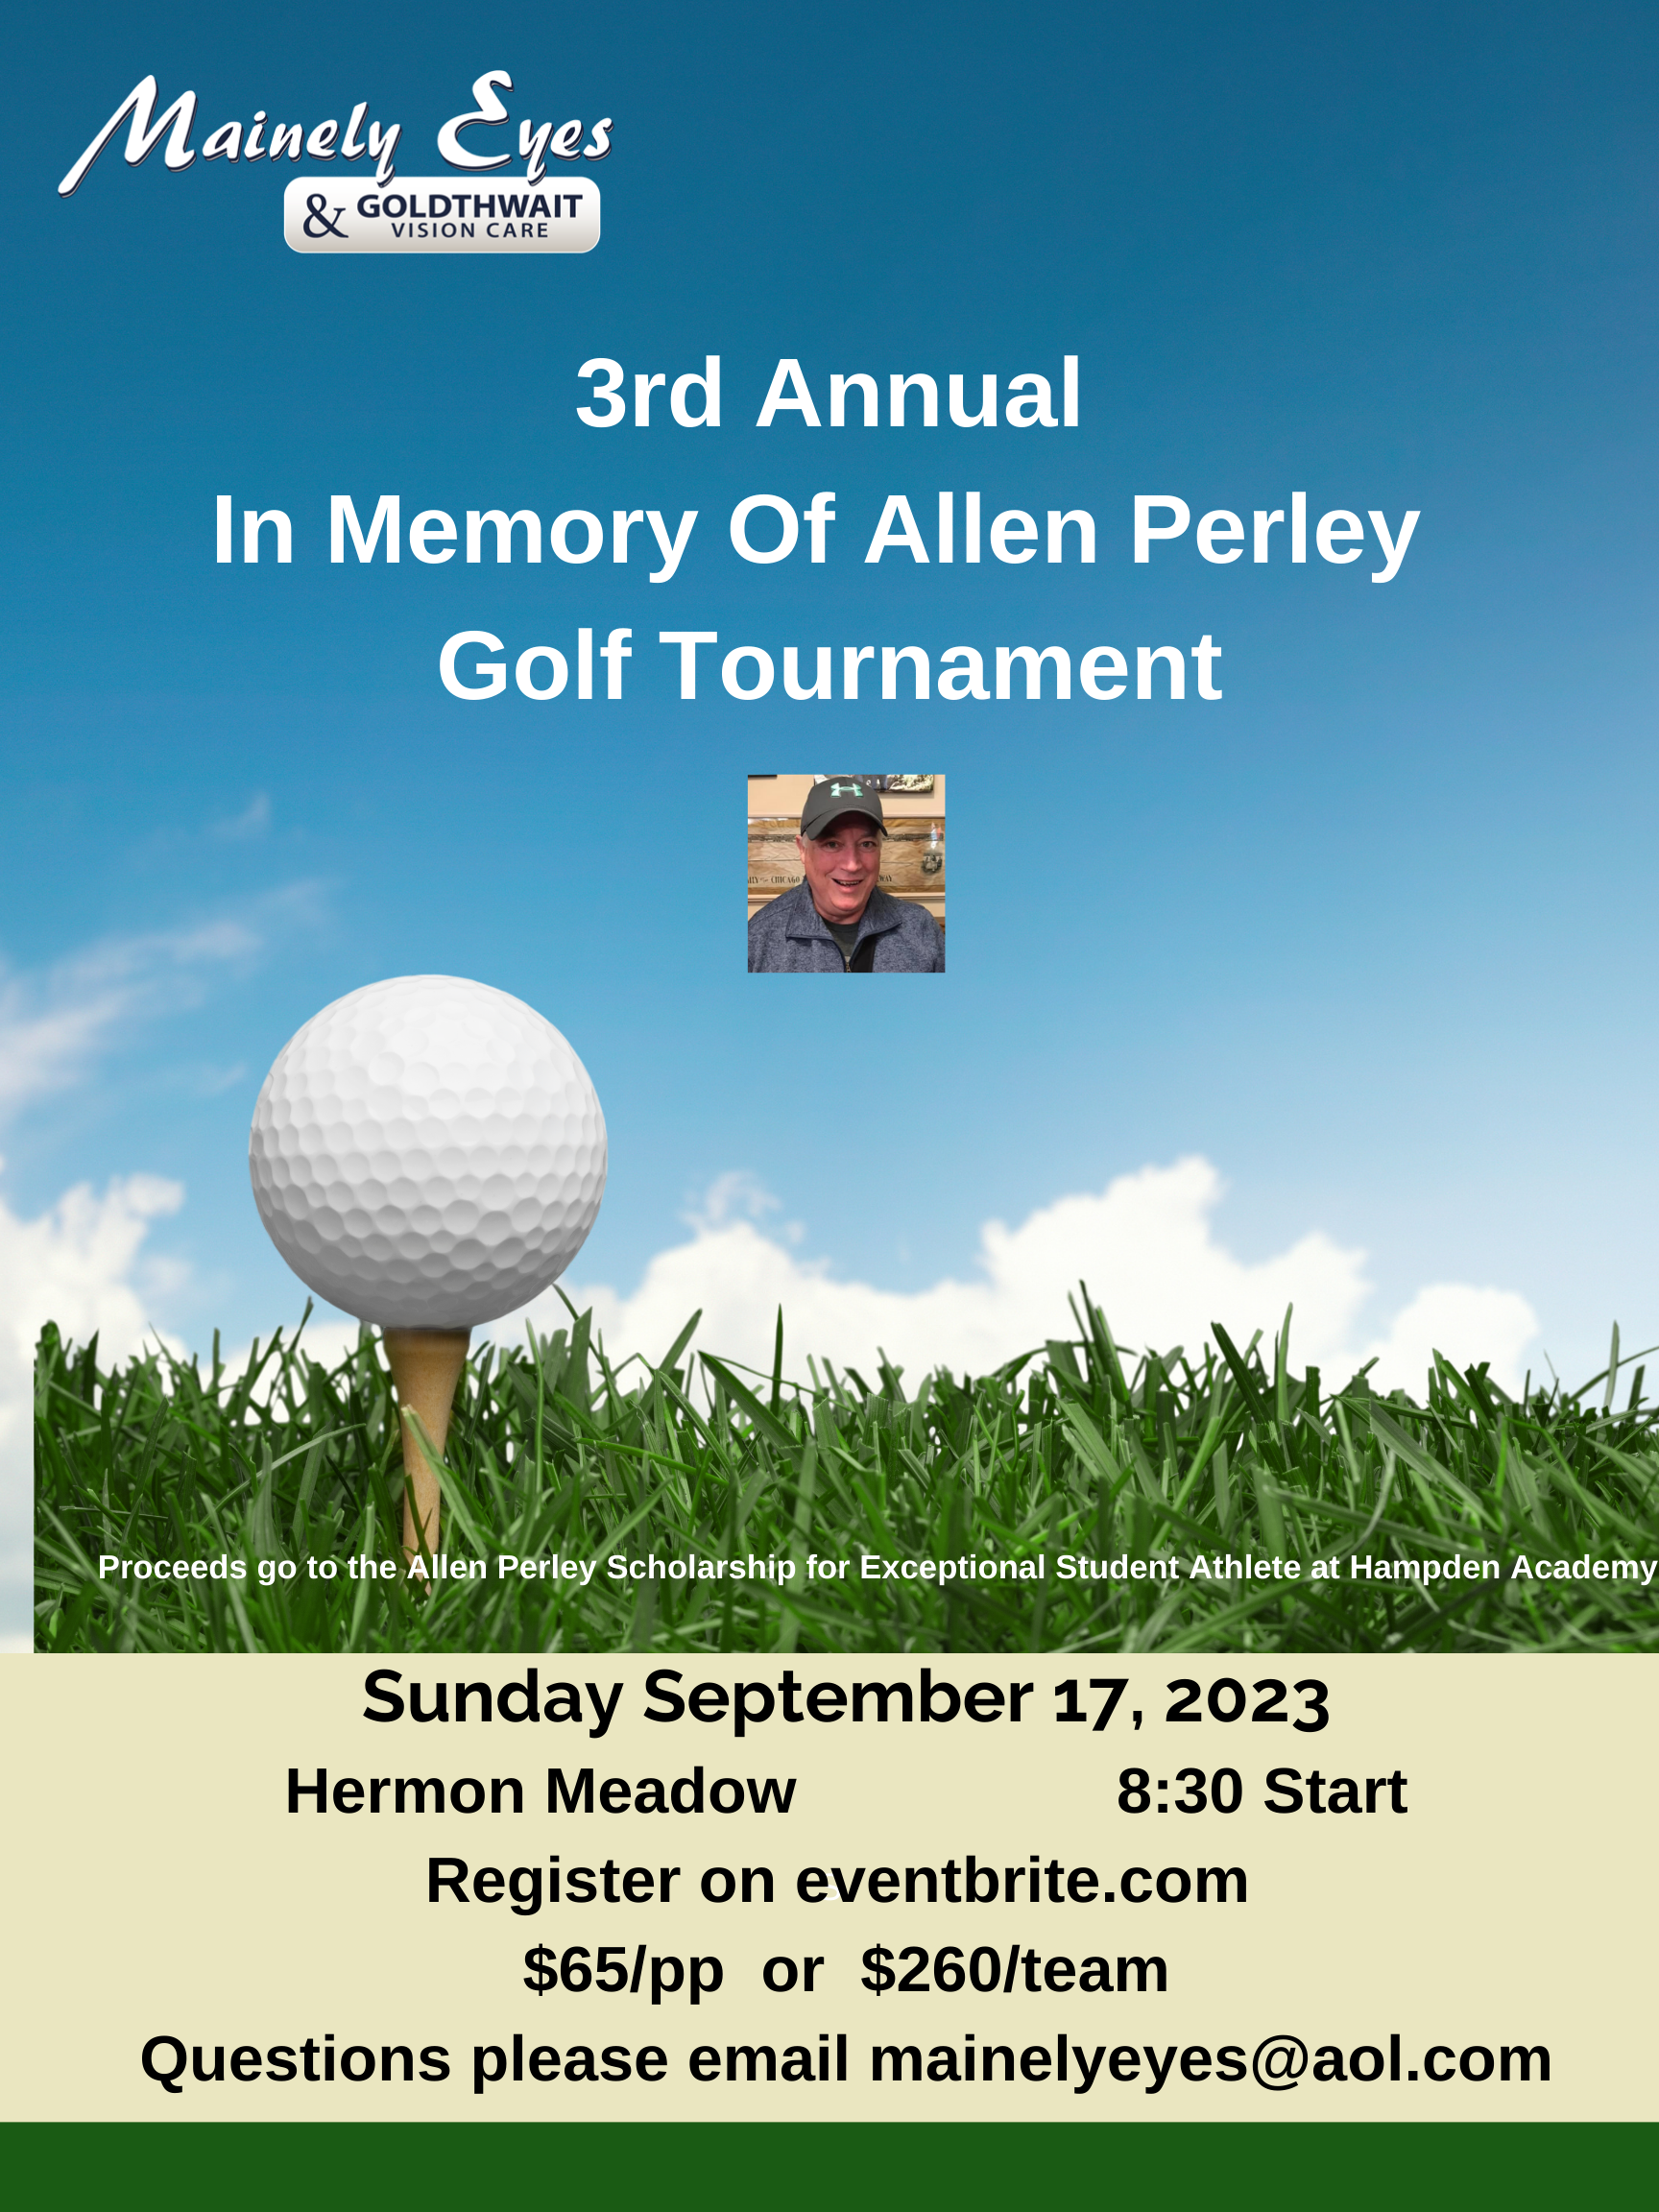 3rd Annual Allen Perley Golf Tournament